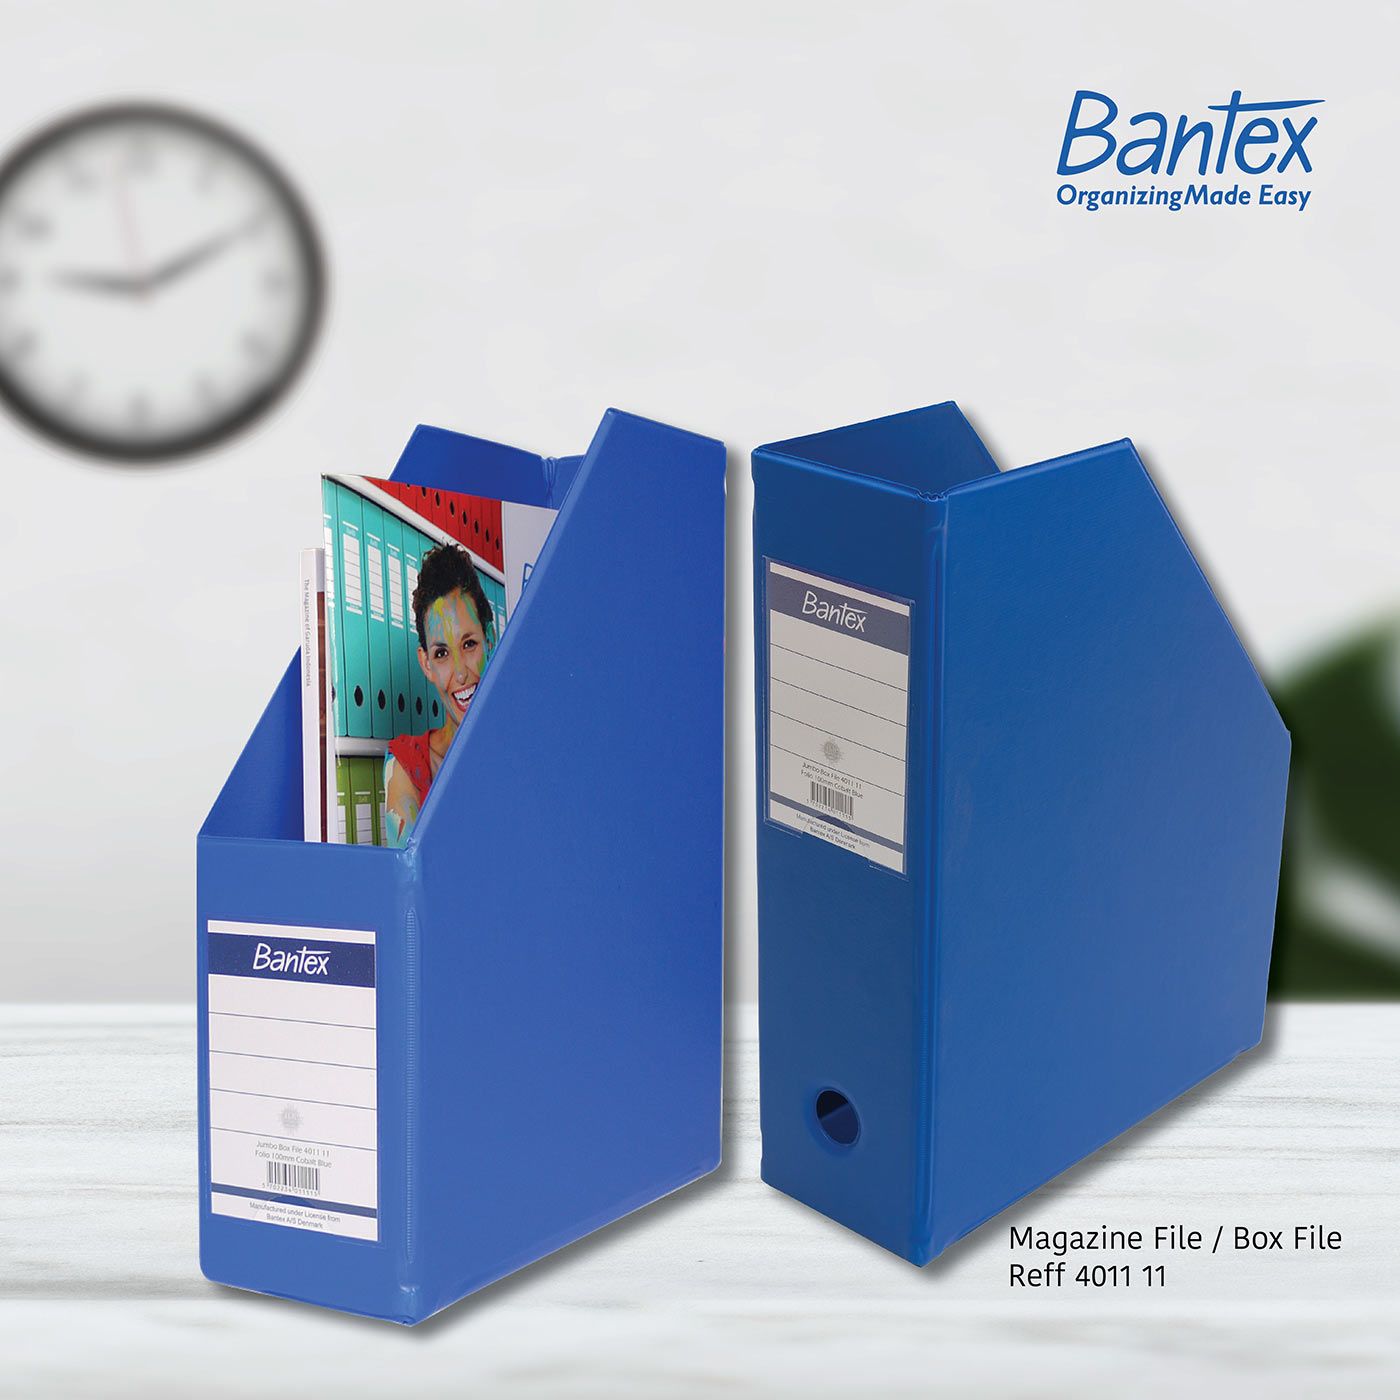 Bantex Magazine Files (Box Files) Folio 10 Cm - 4011 11 - 3